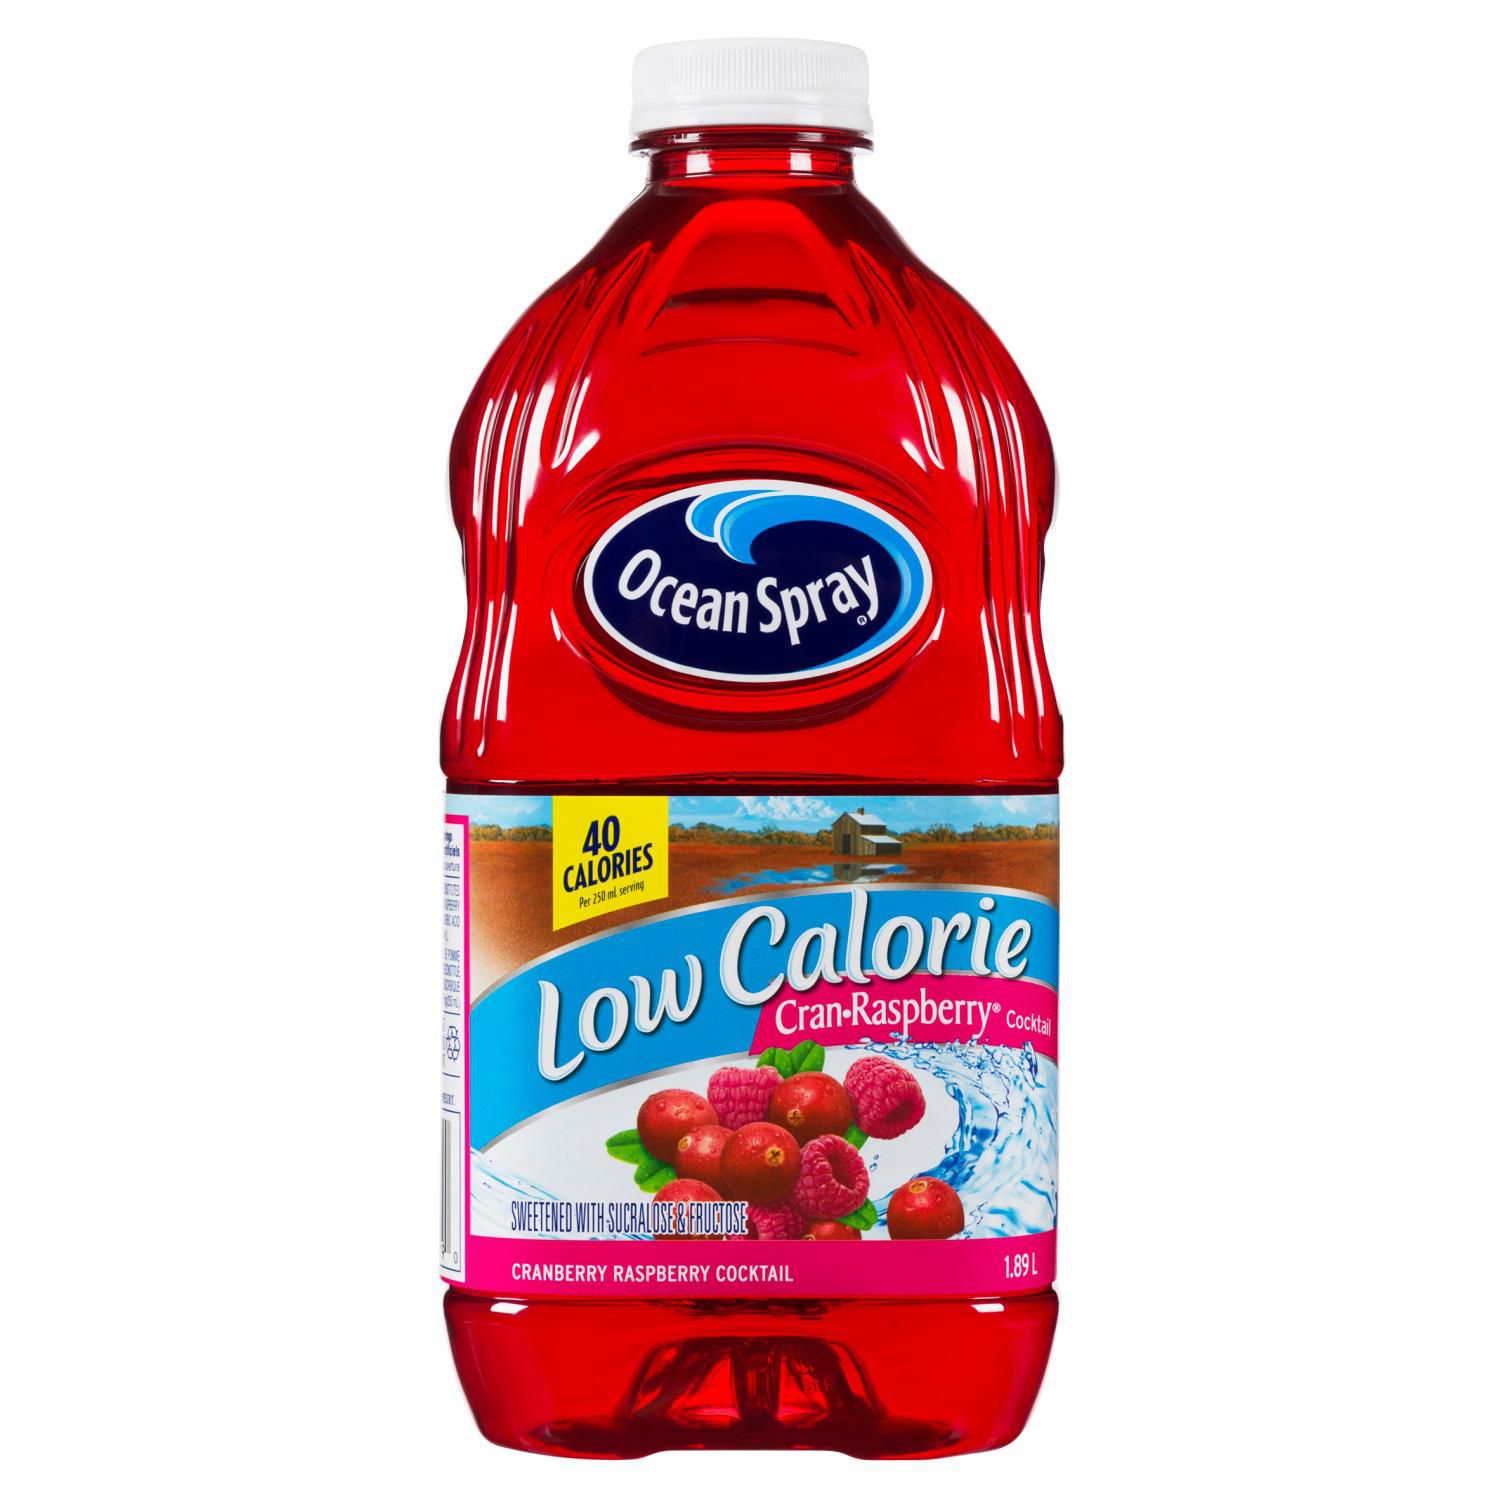 Ocean Spray Low Calorie Cran·Raspberry® Cocktail | Walmart Canada